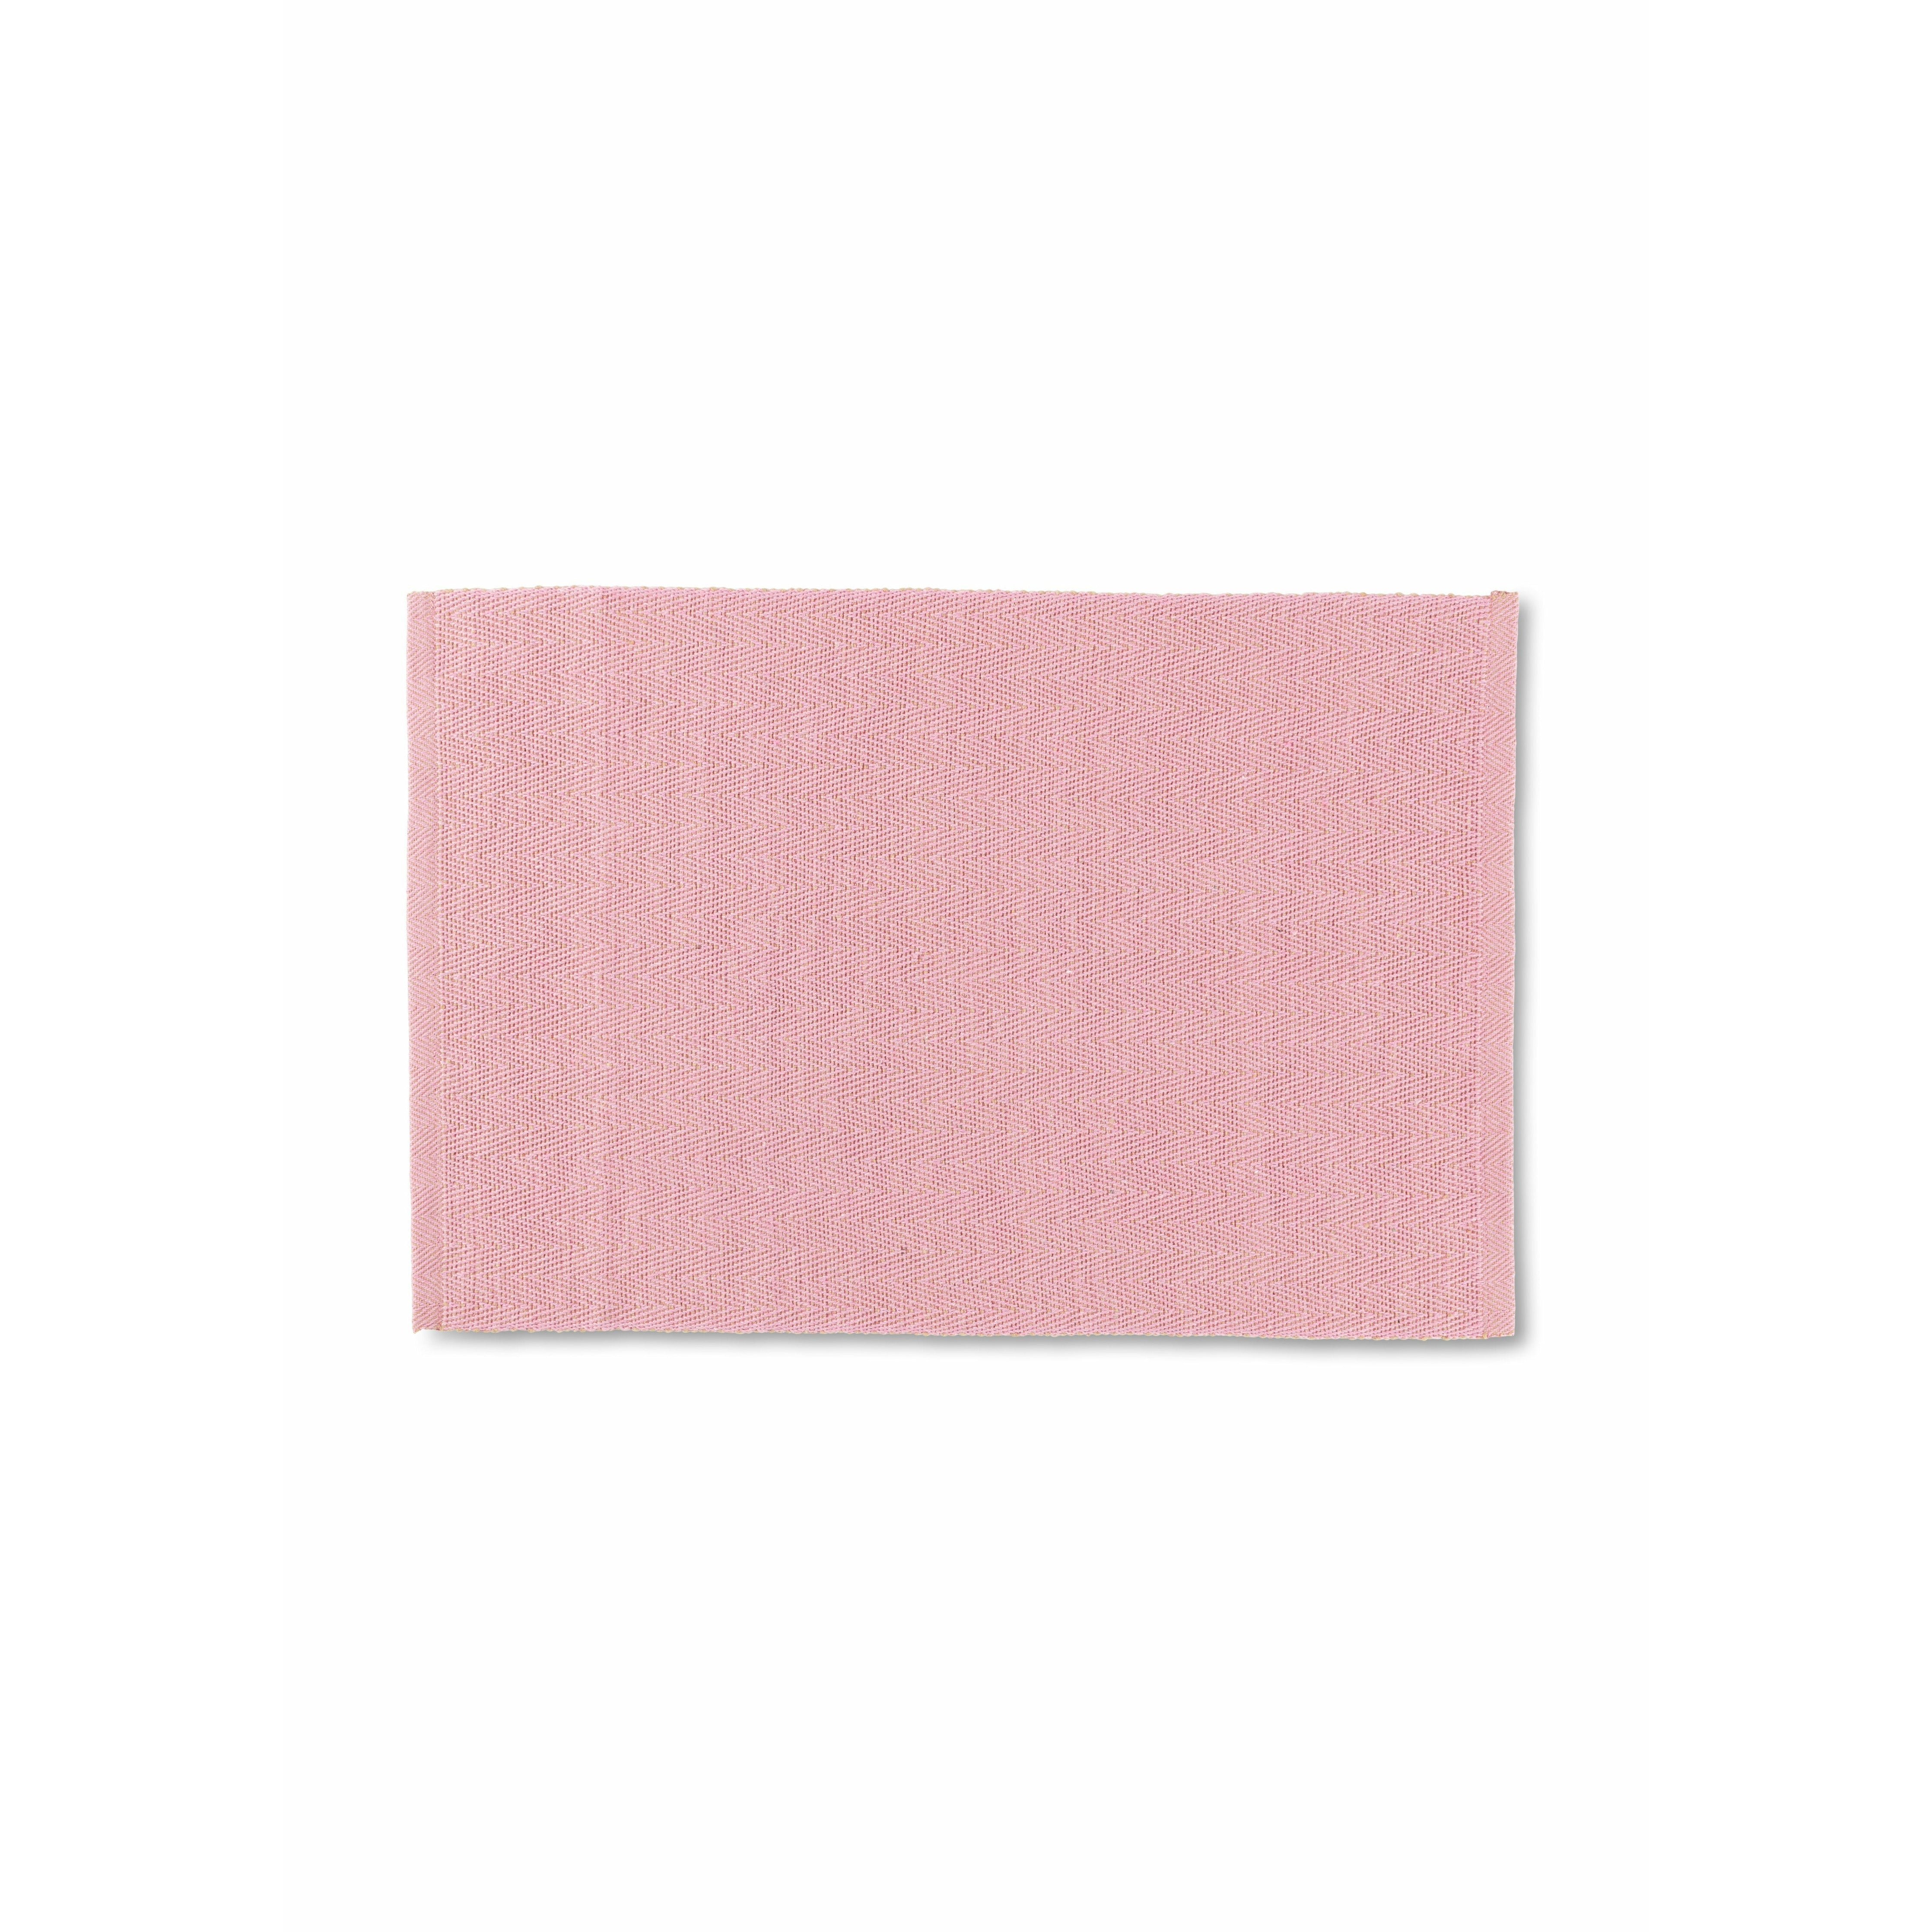 Lyngby Porscelæn Herringband Placemat 43x30 cm, roze